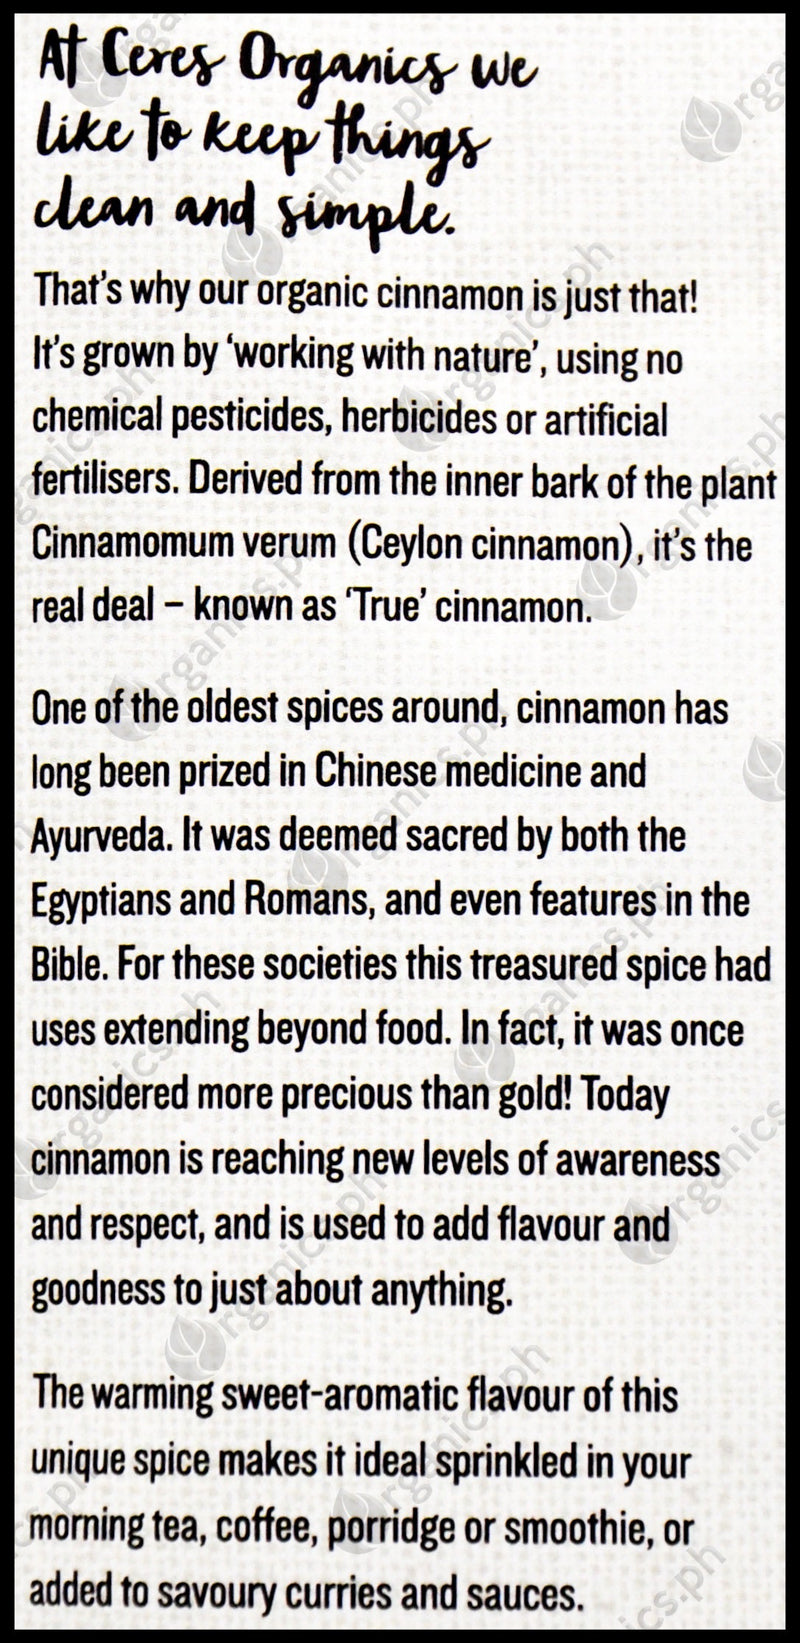 Ceres Organics Ground Cinnamon (100g) - Organics.ph